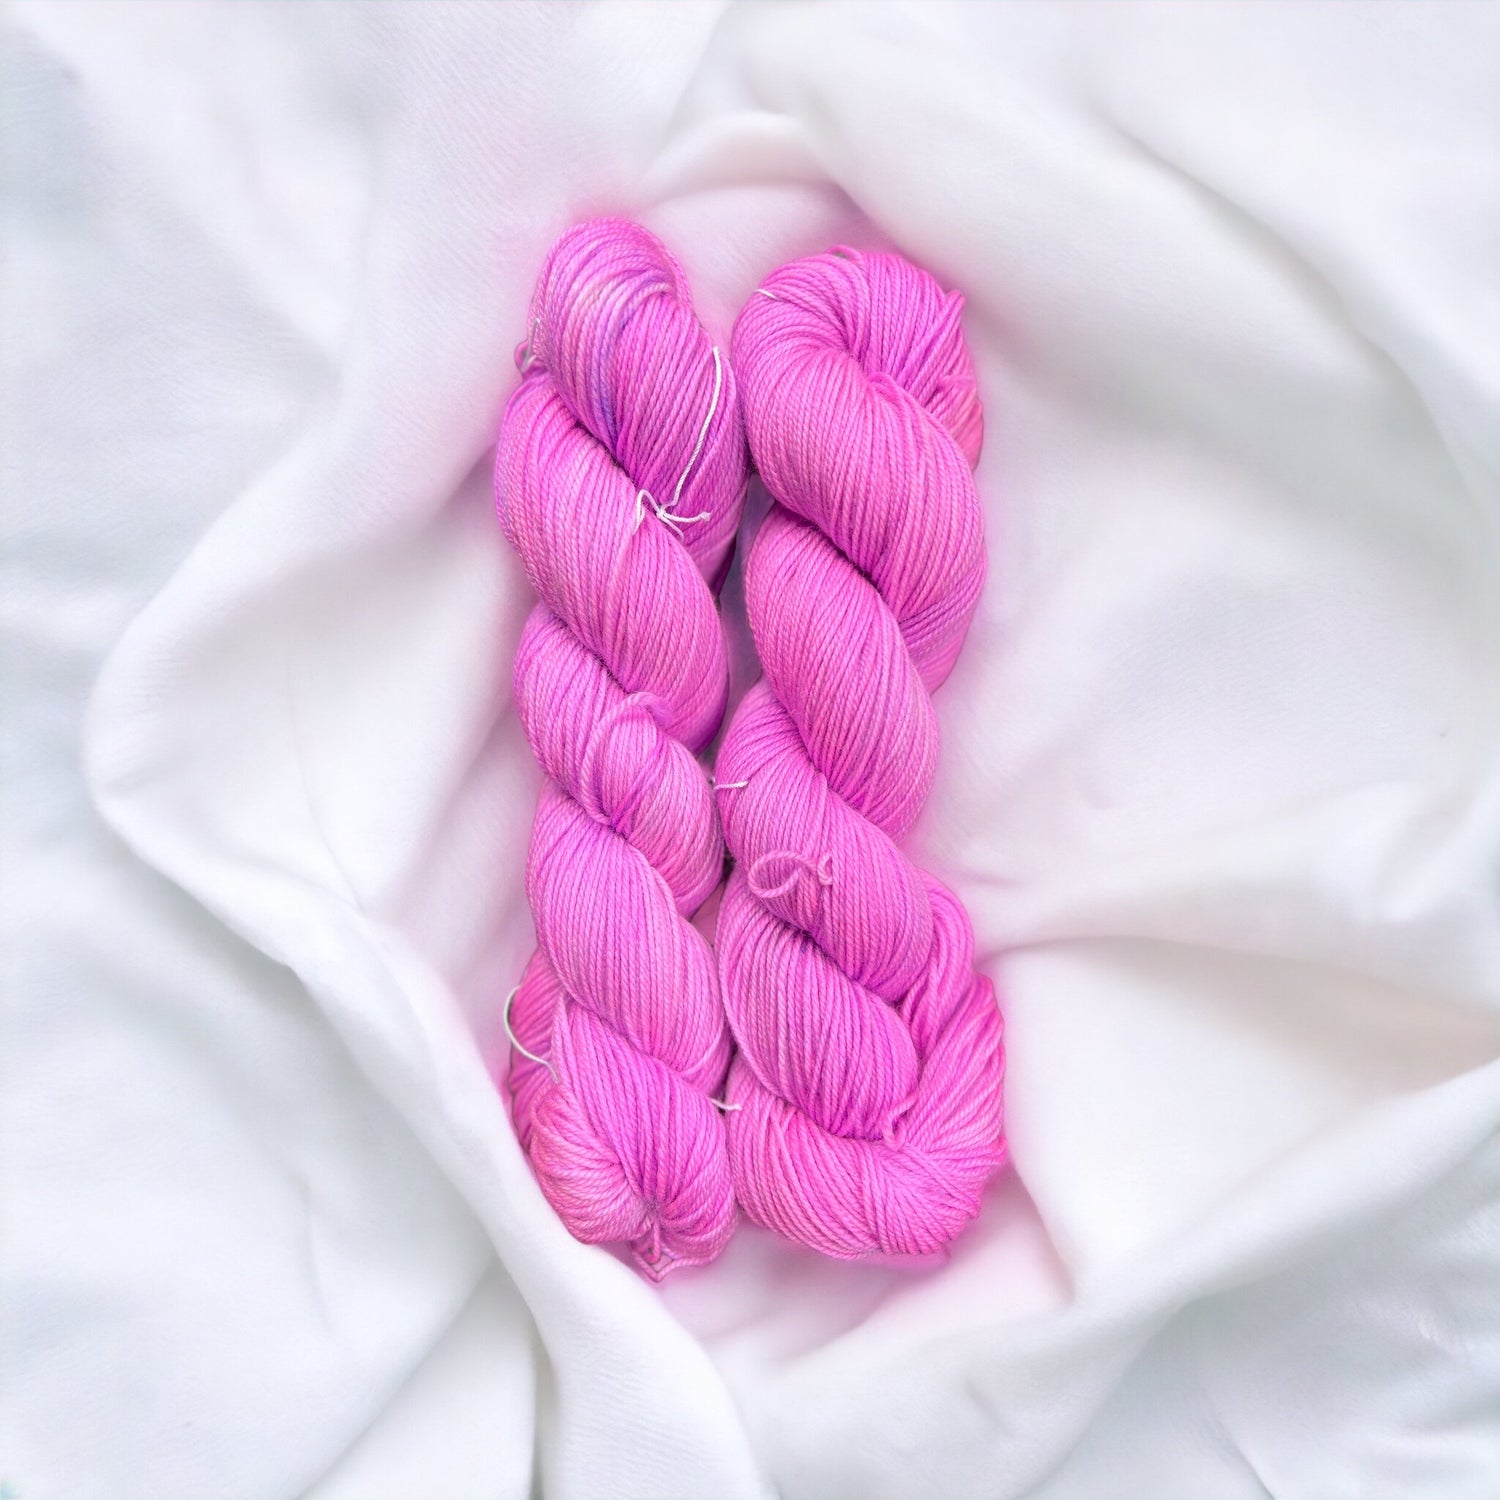 Misfit-80/20 superwash merino/nylon sock yarn - SkeinAppeal